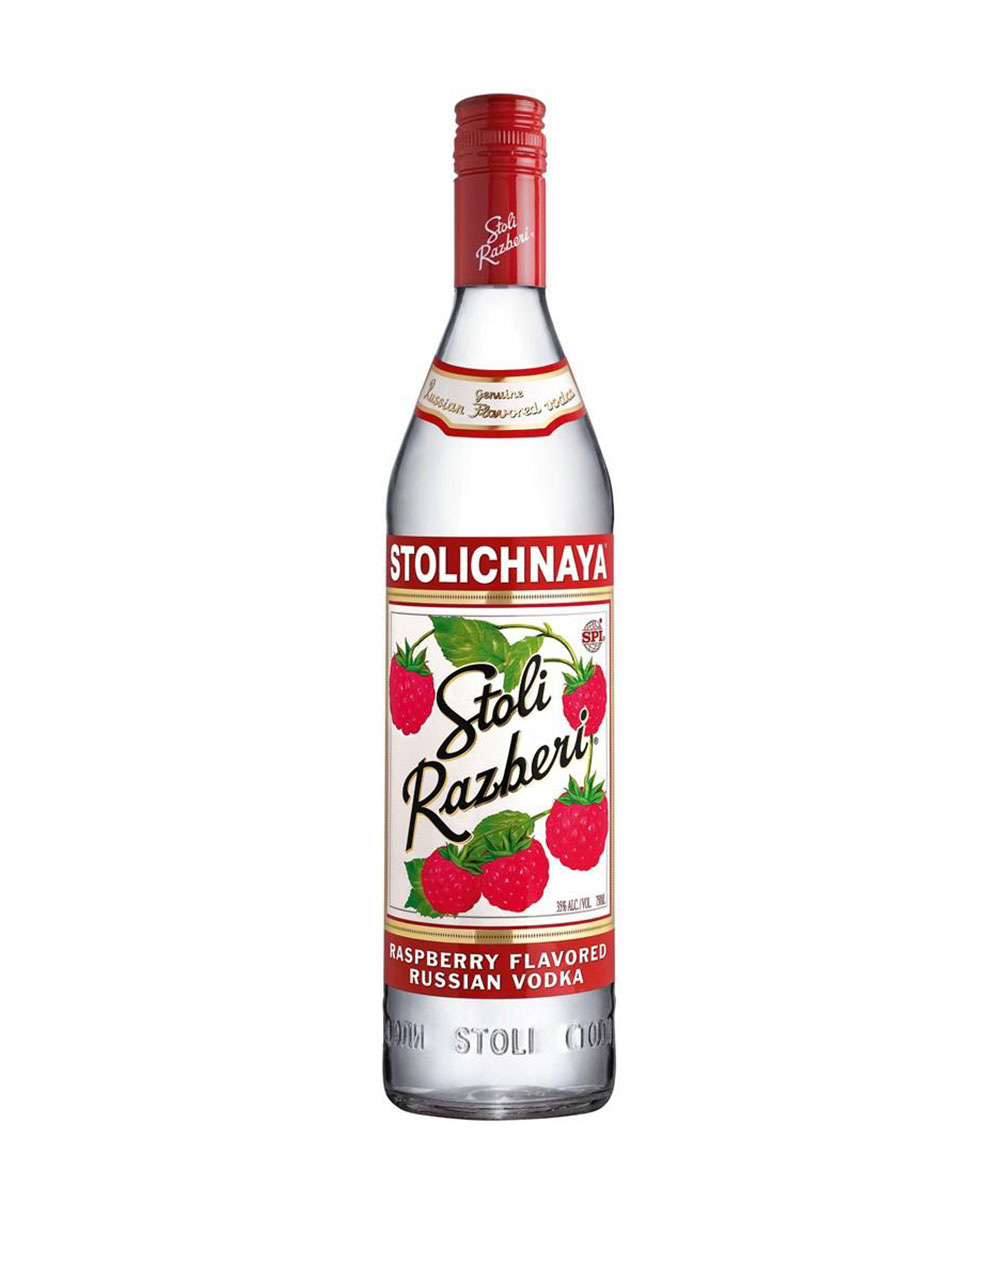 Smirnoff Sorbet Light Raspberry Pomegranate Vodka